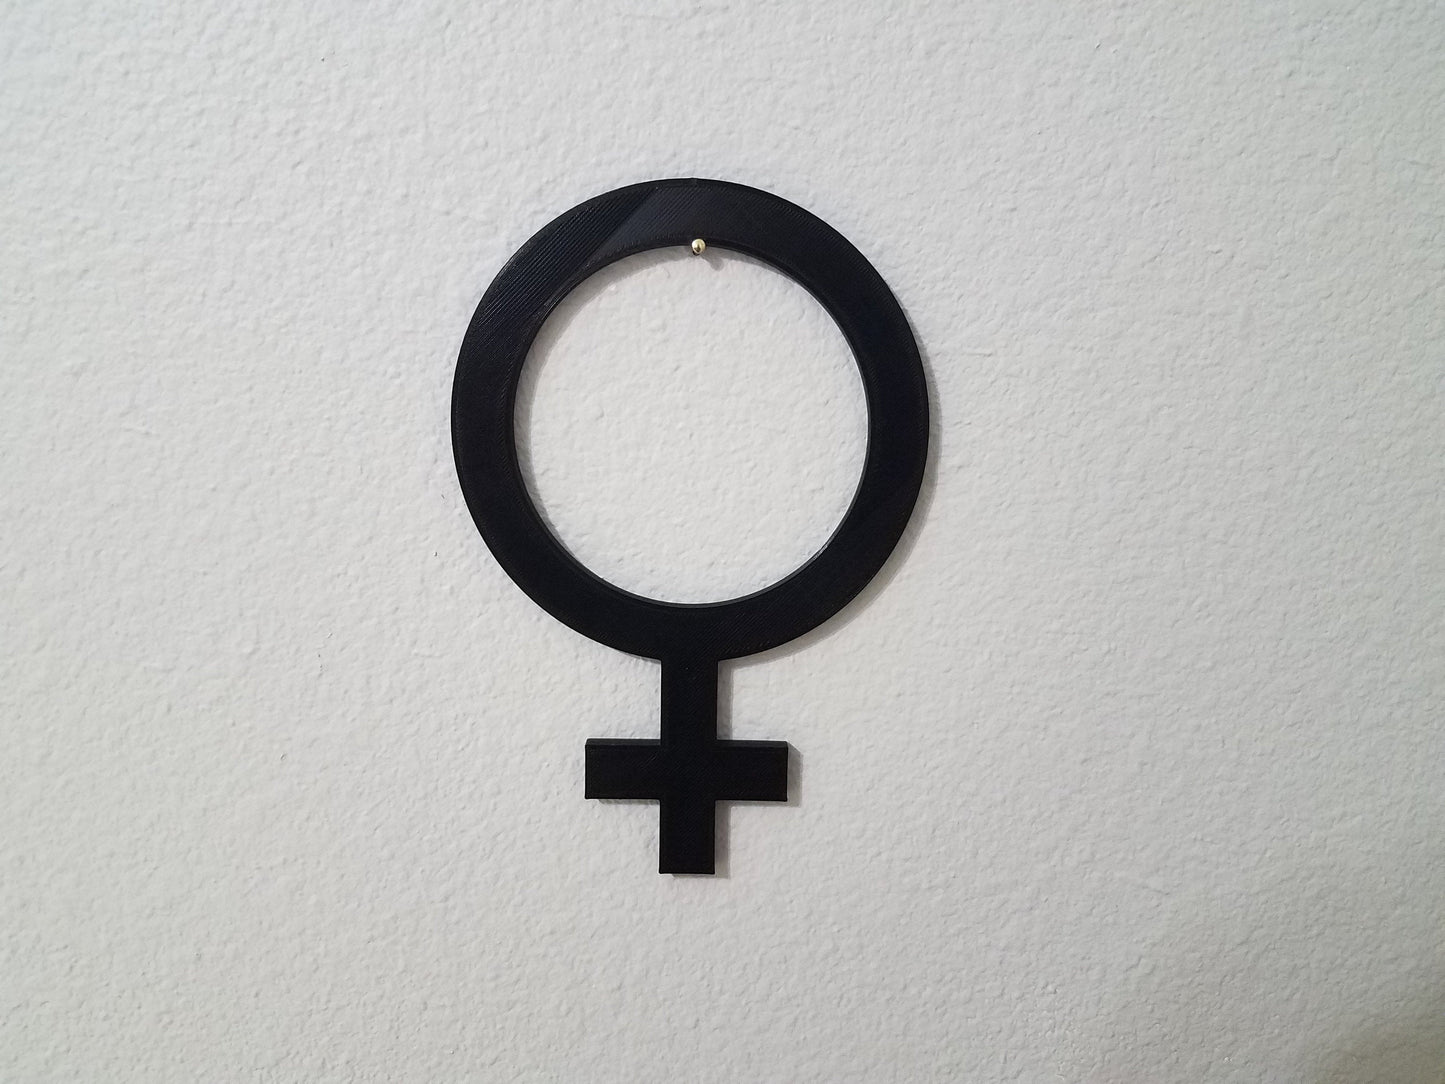 Female Sign, Venus Astrological Planet Wall Art